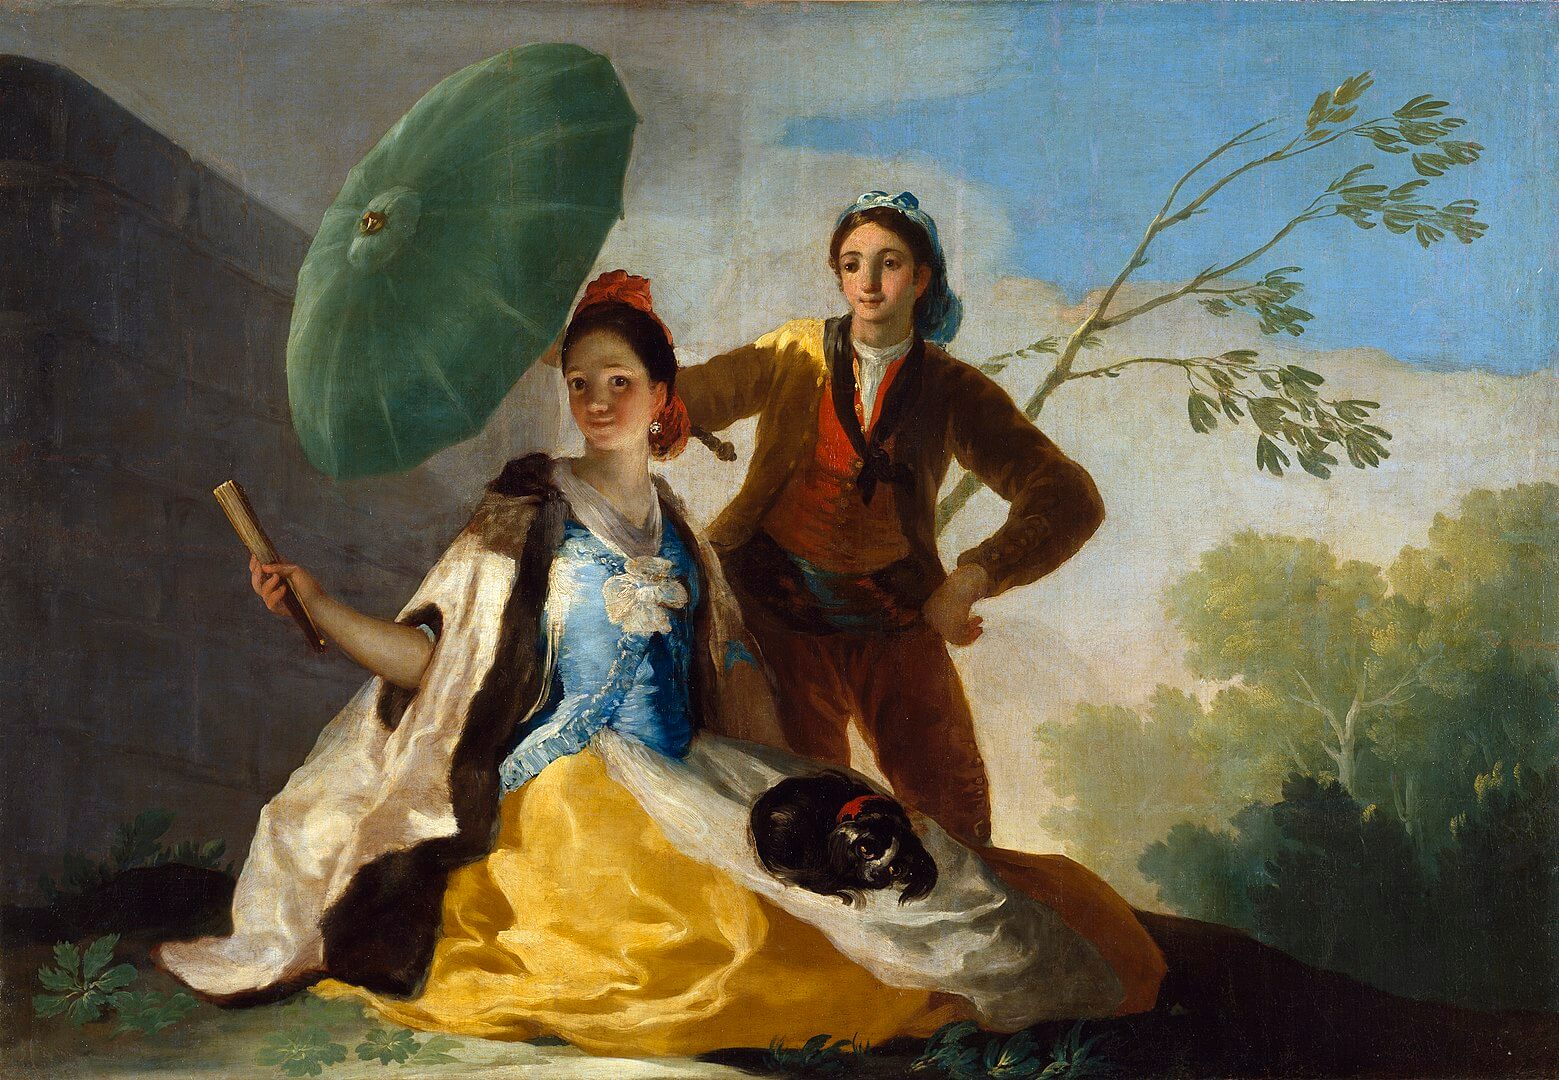 Prado Museum: "The Parasol" - Francisco de Goya